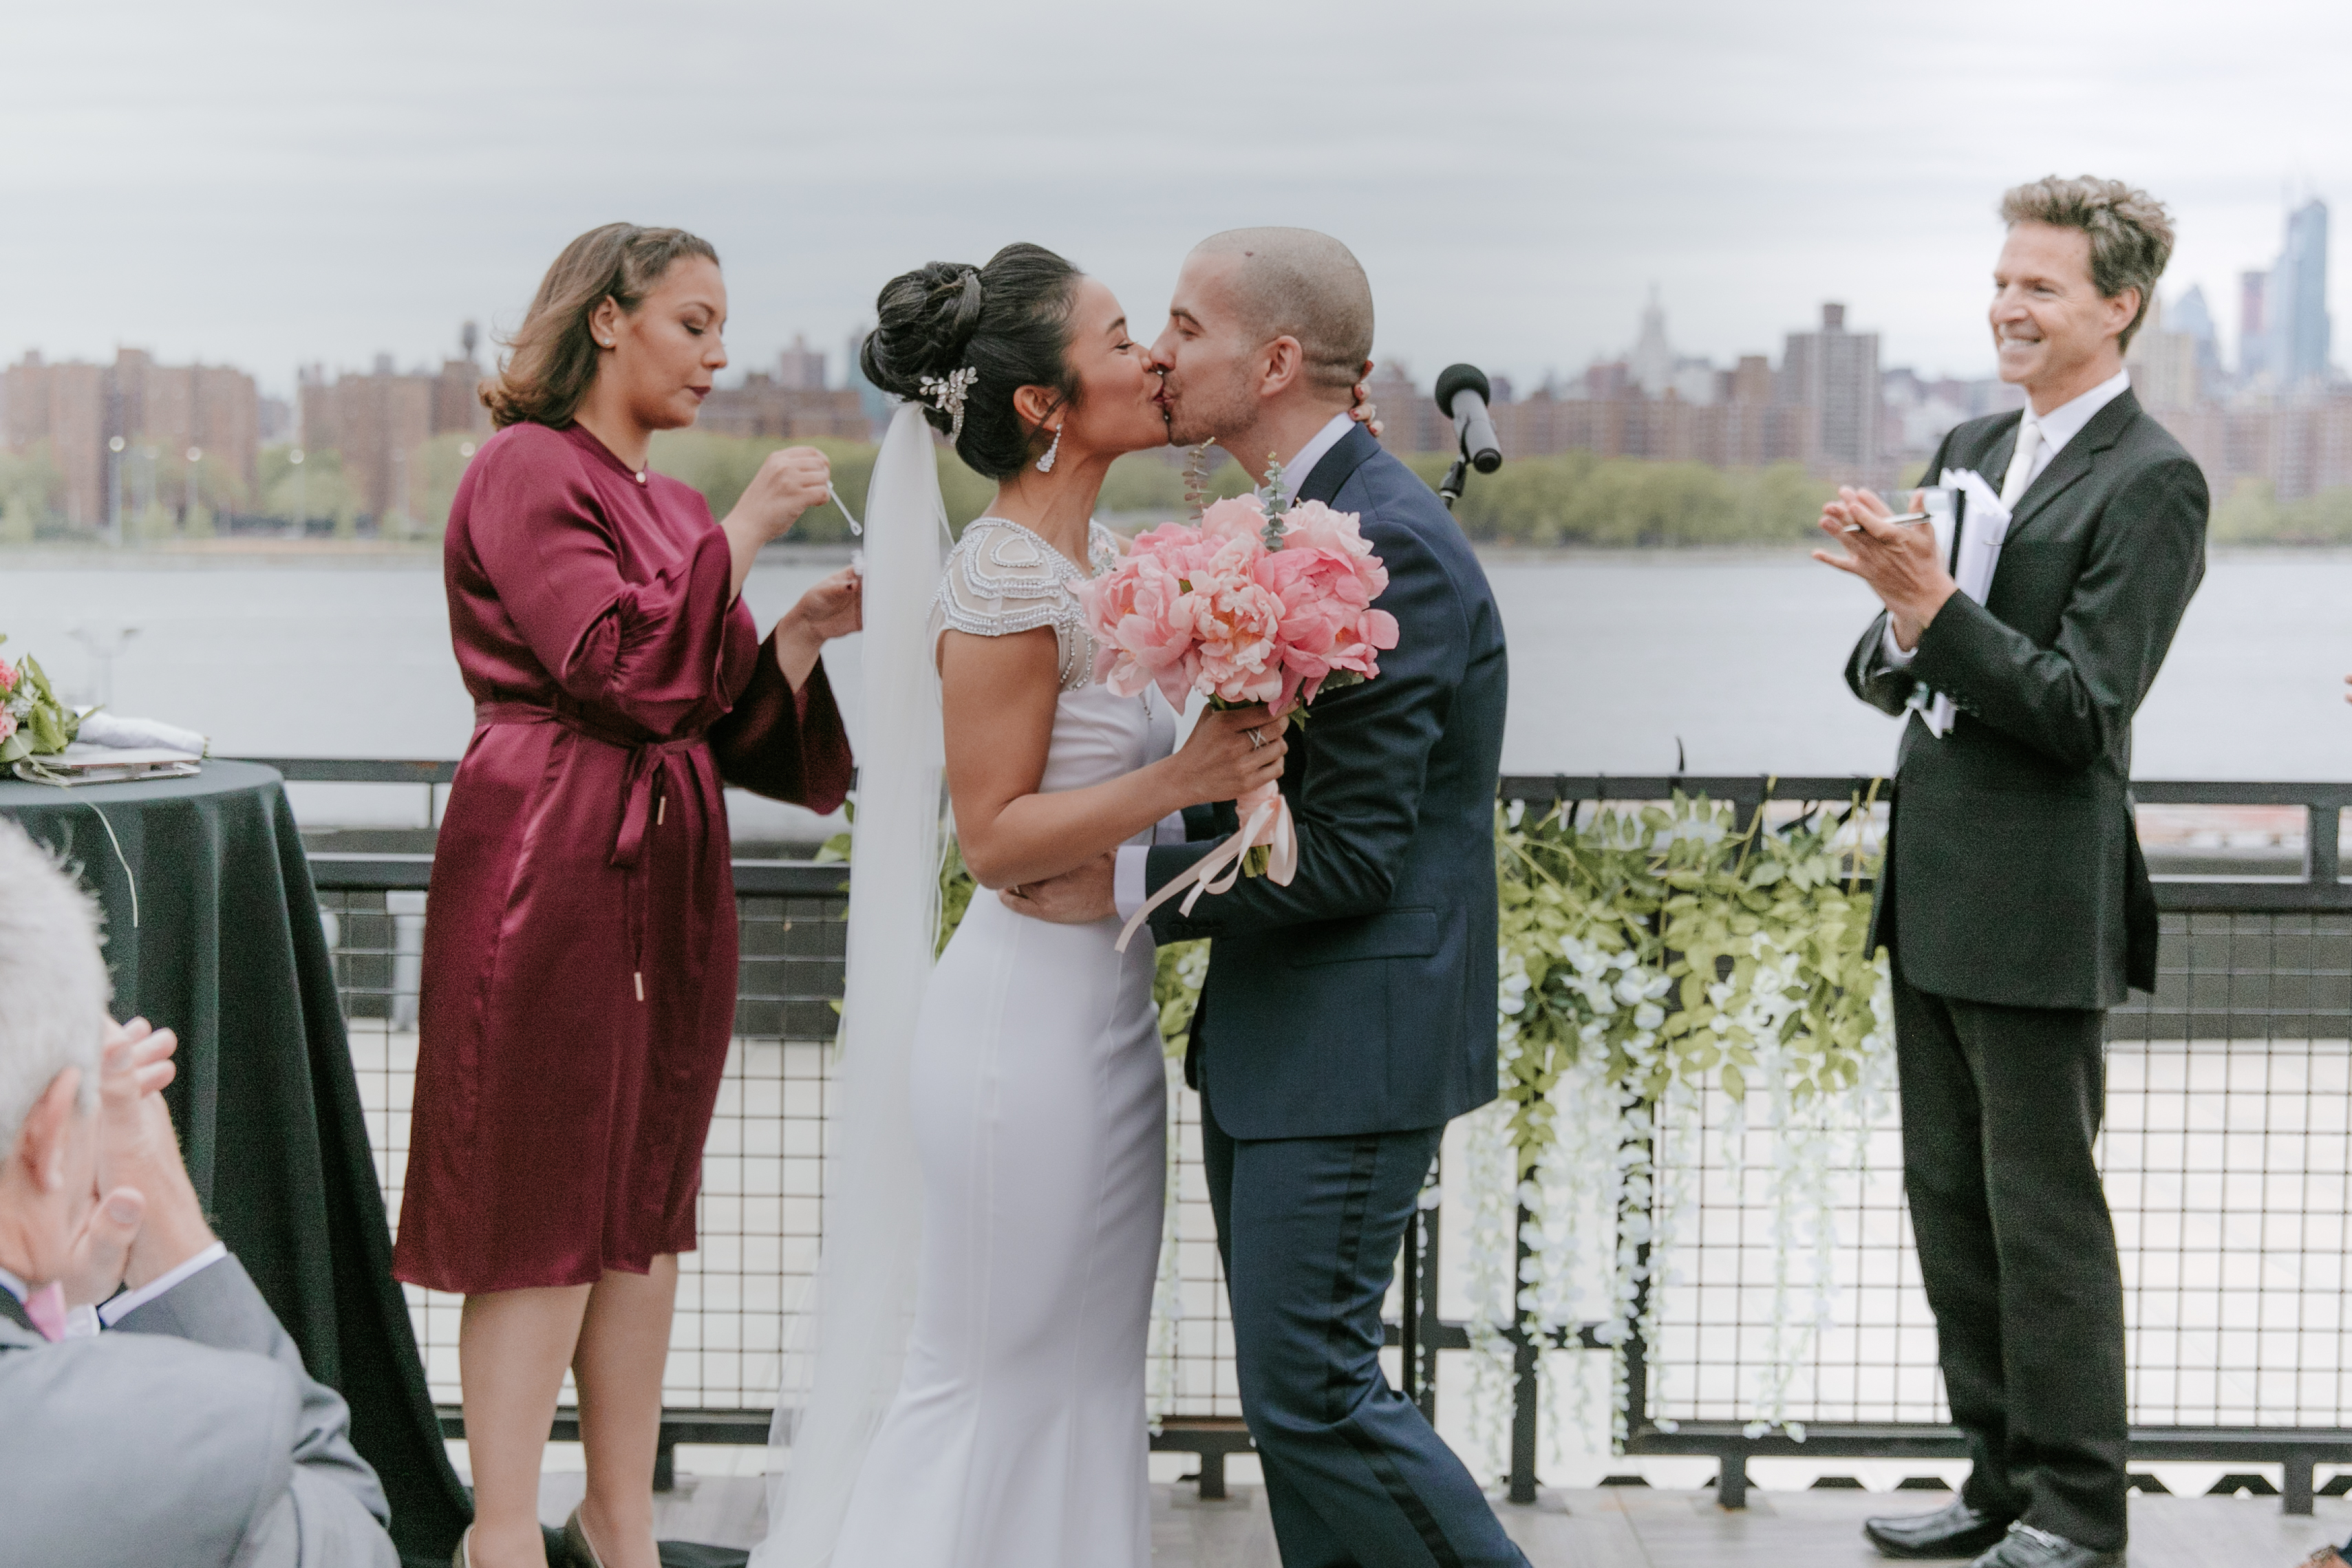 05 06 18 Elodie and Bertrand Wedding 230 - Wedding Video Sweepstakes Winners Wed at The W Loft in Brooklyn